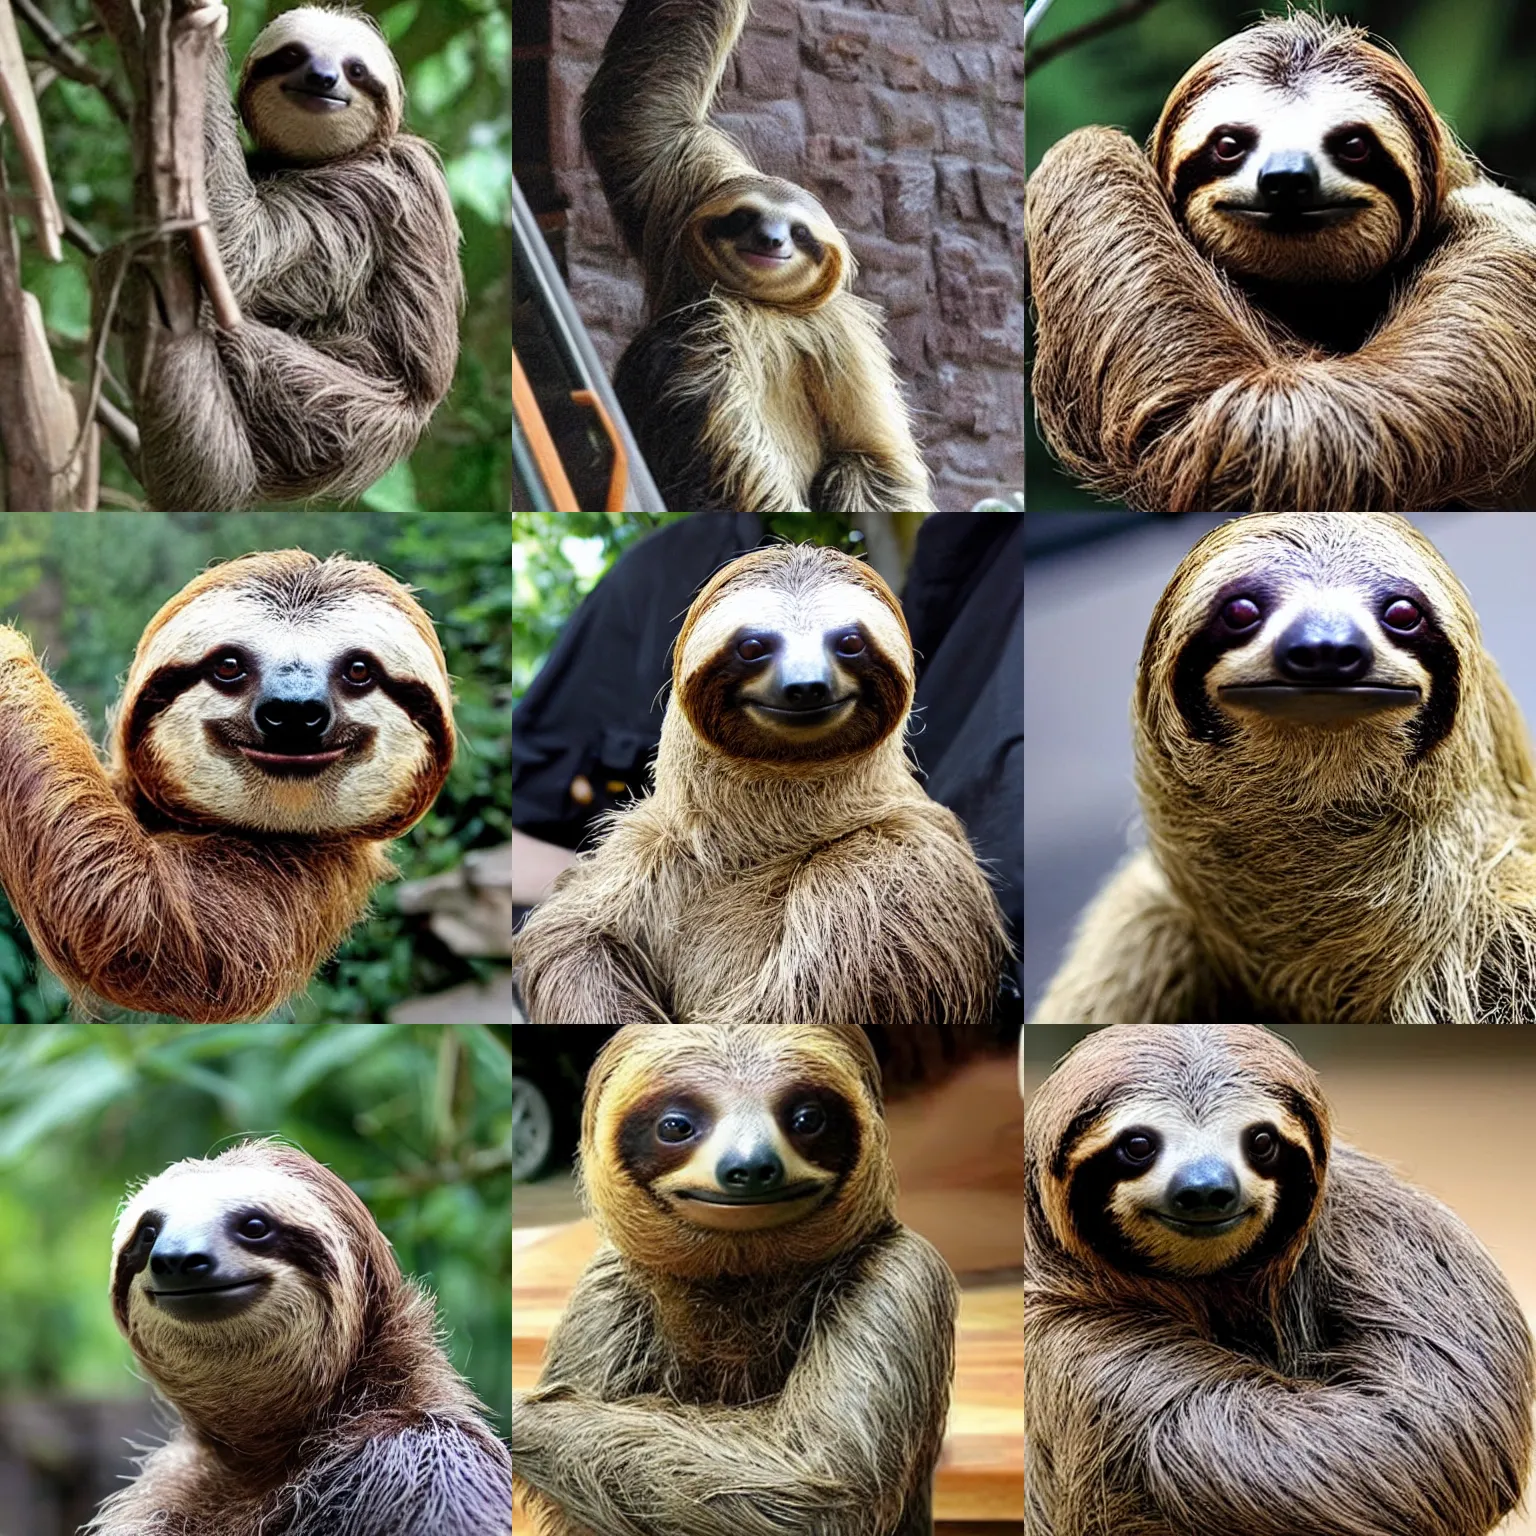 Prompt: a sloth that looks like brad pitt